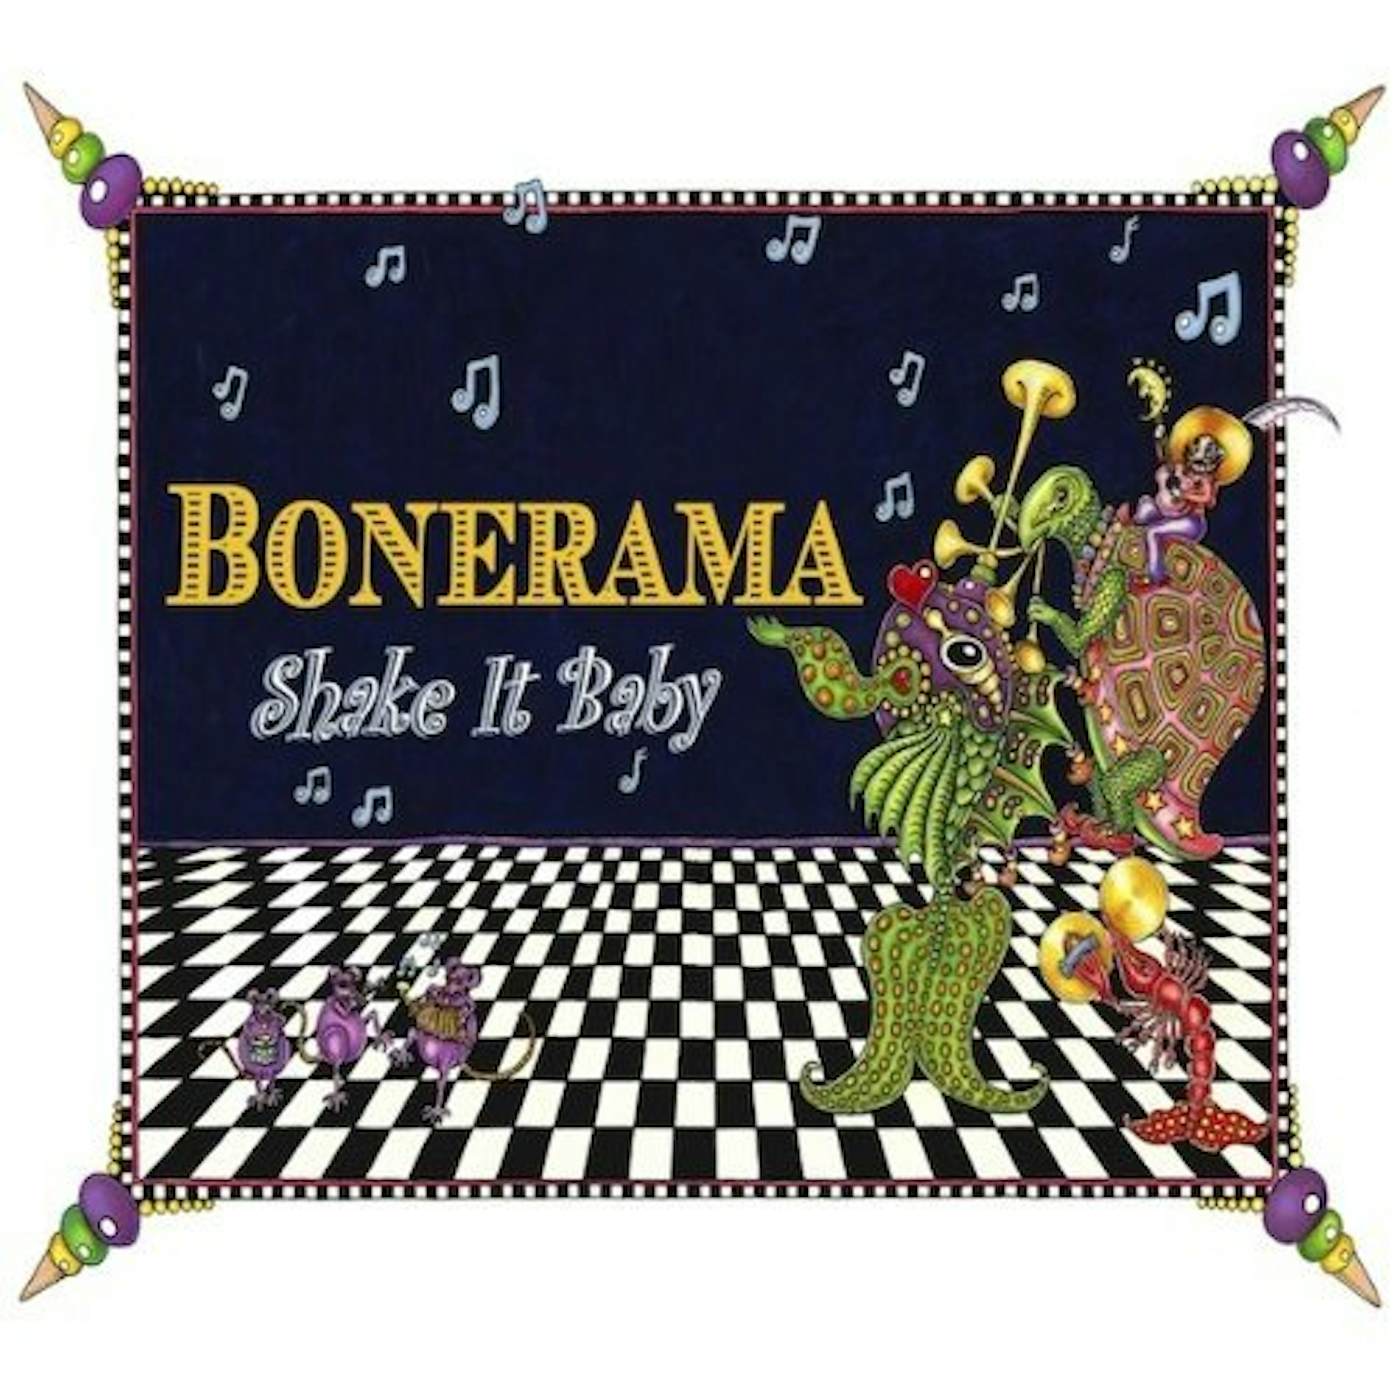 Bonerama SHAKE IT BABY CD